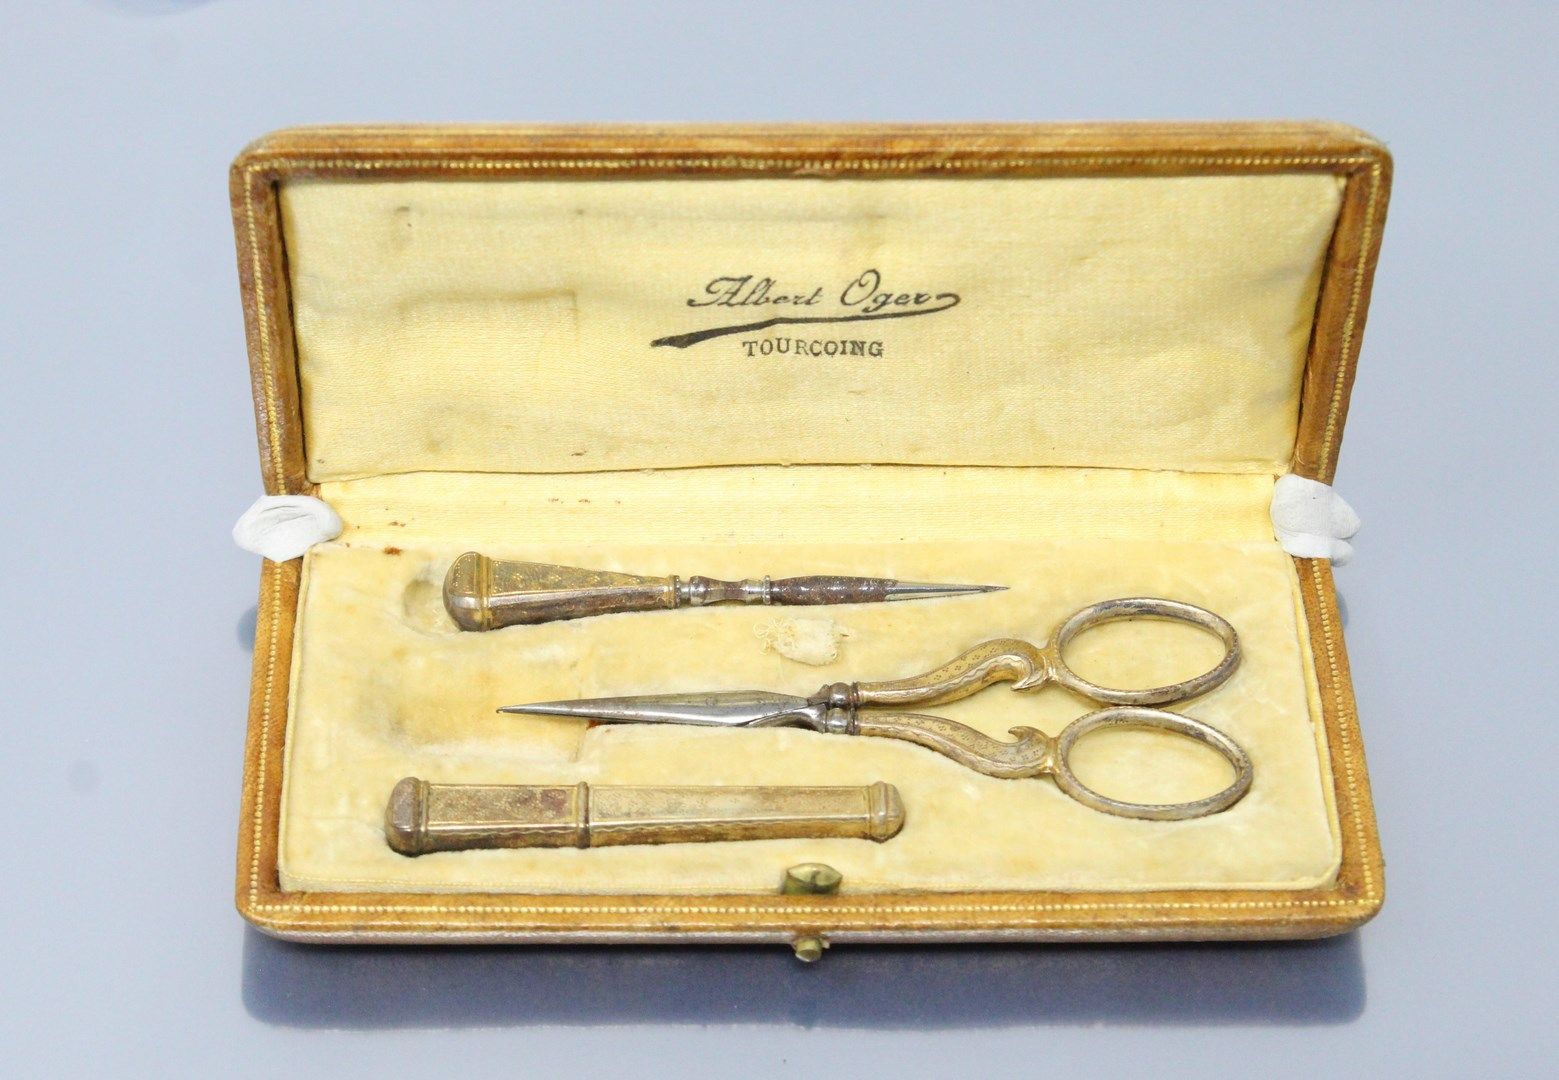 Null 银色（野猪）缝纫套装，包括一个针架，一个打孔器和一把剪刀（破损），缺少模具。在阿尔伯特-奥热在图尔库因制造的一个案例中。

毛重：20.40克。